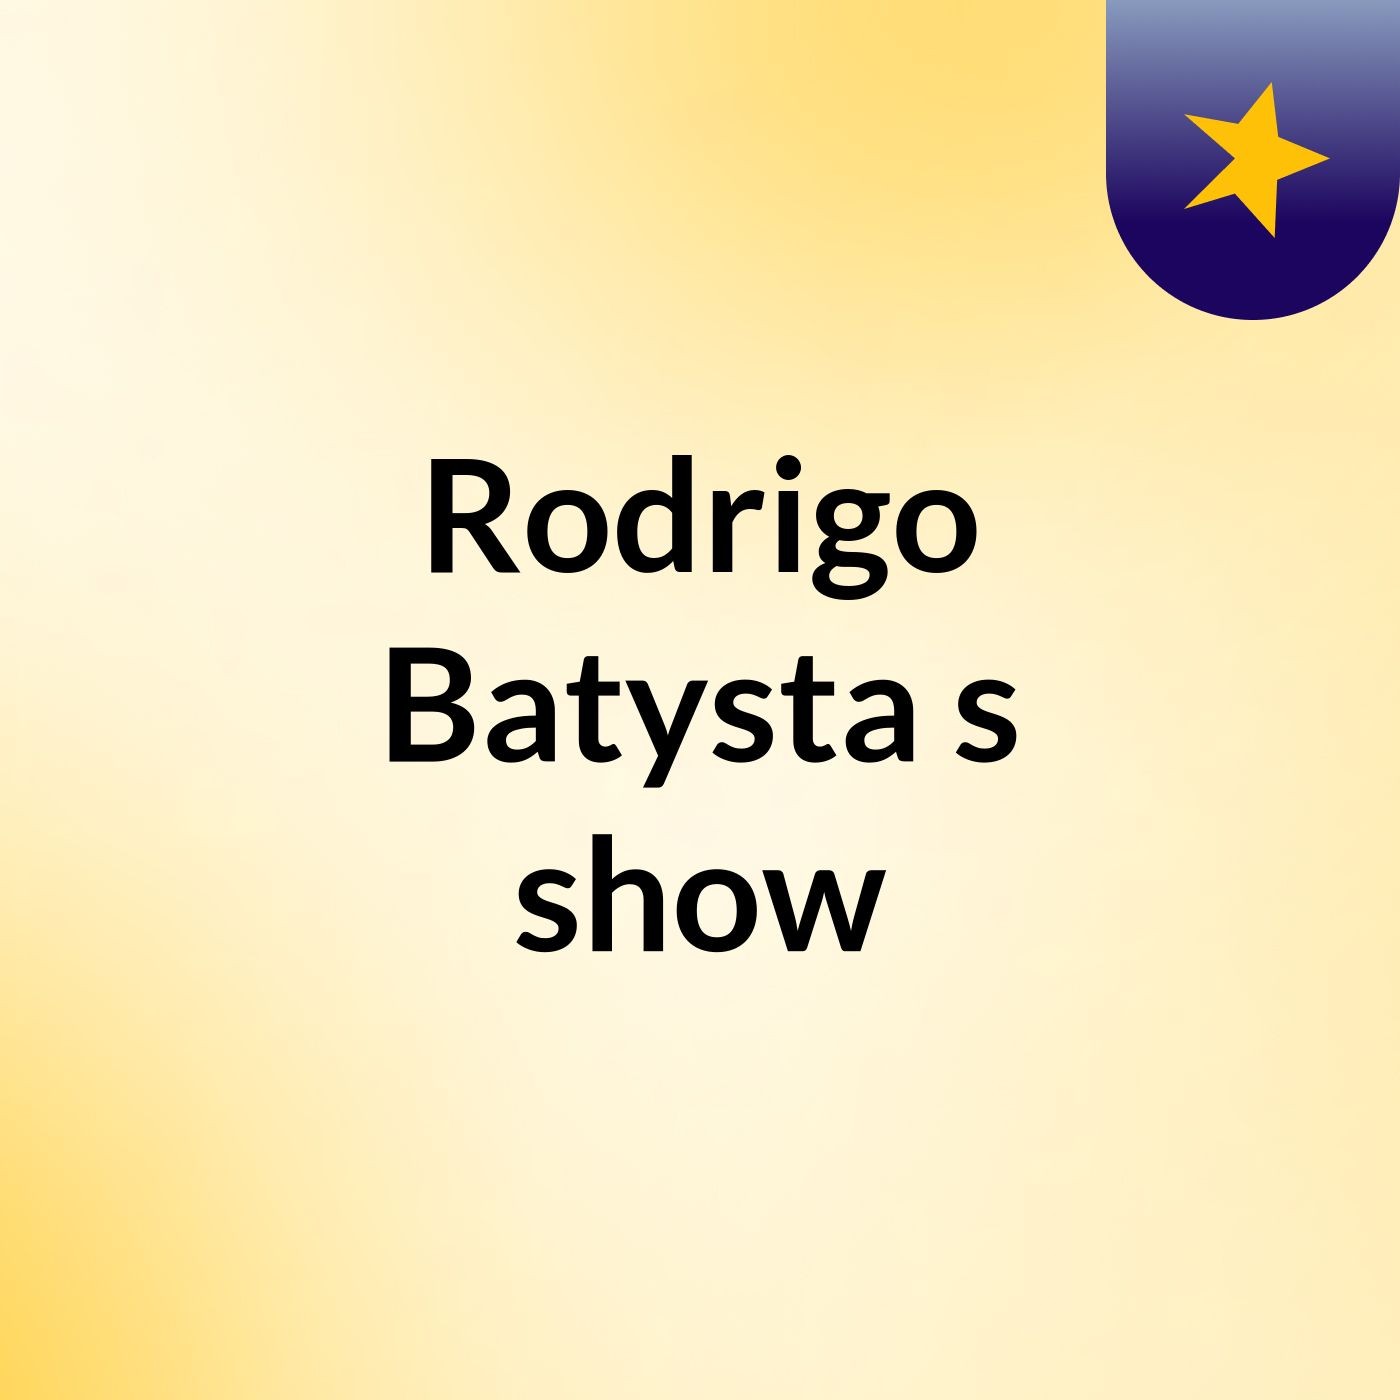 Rodrigo Batysta's show